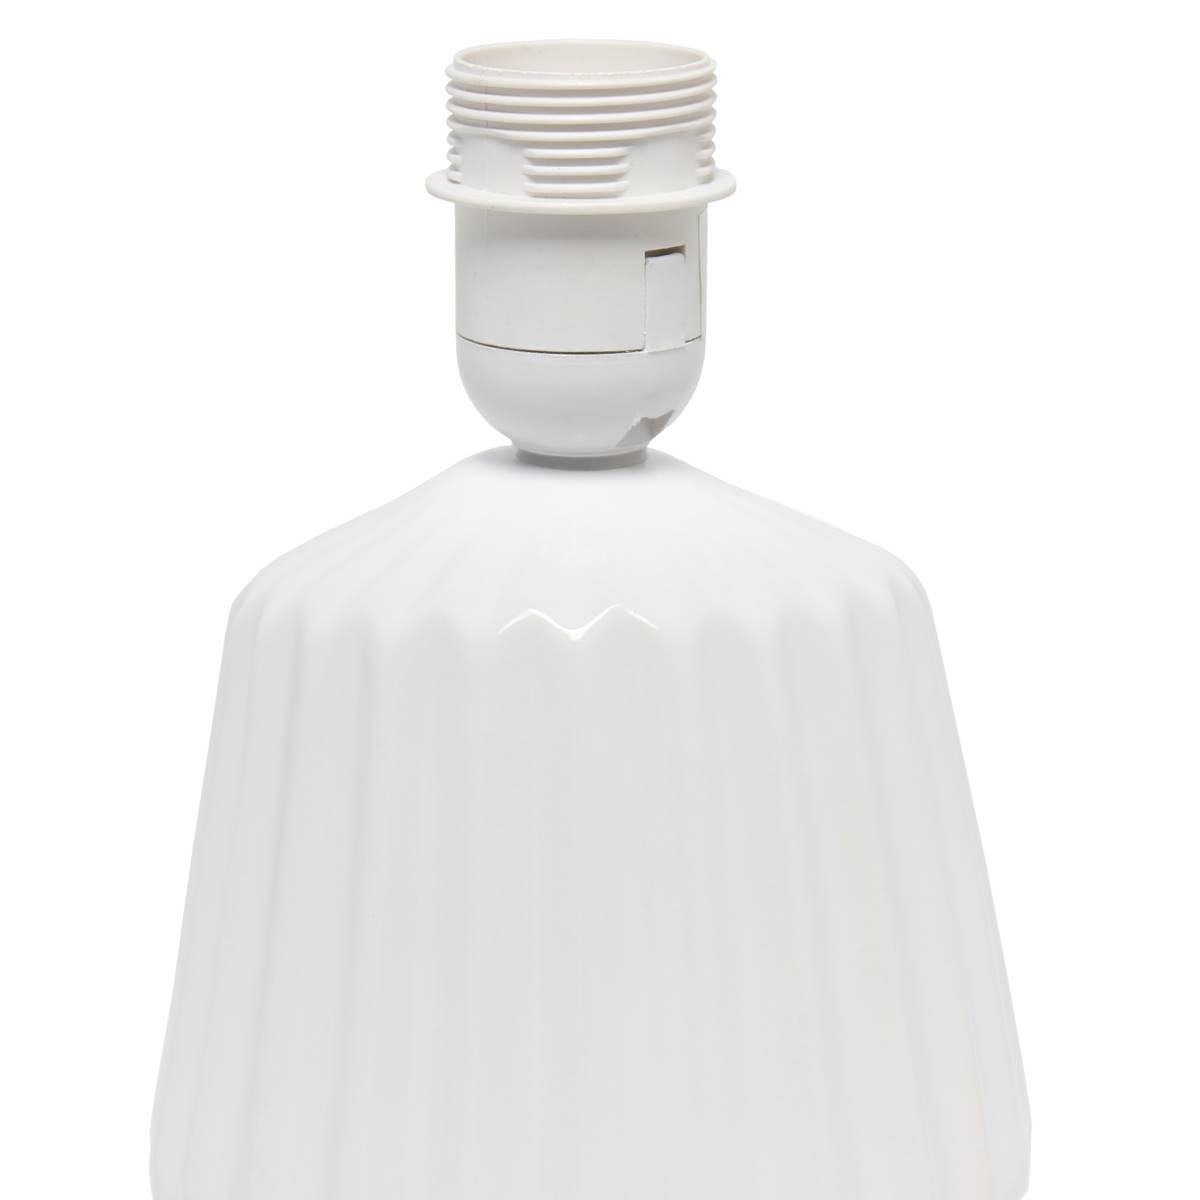 Simple Designs Petite Off White Ceramic Pleated Base Table Lamp